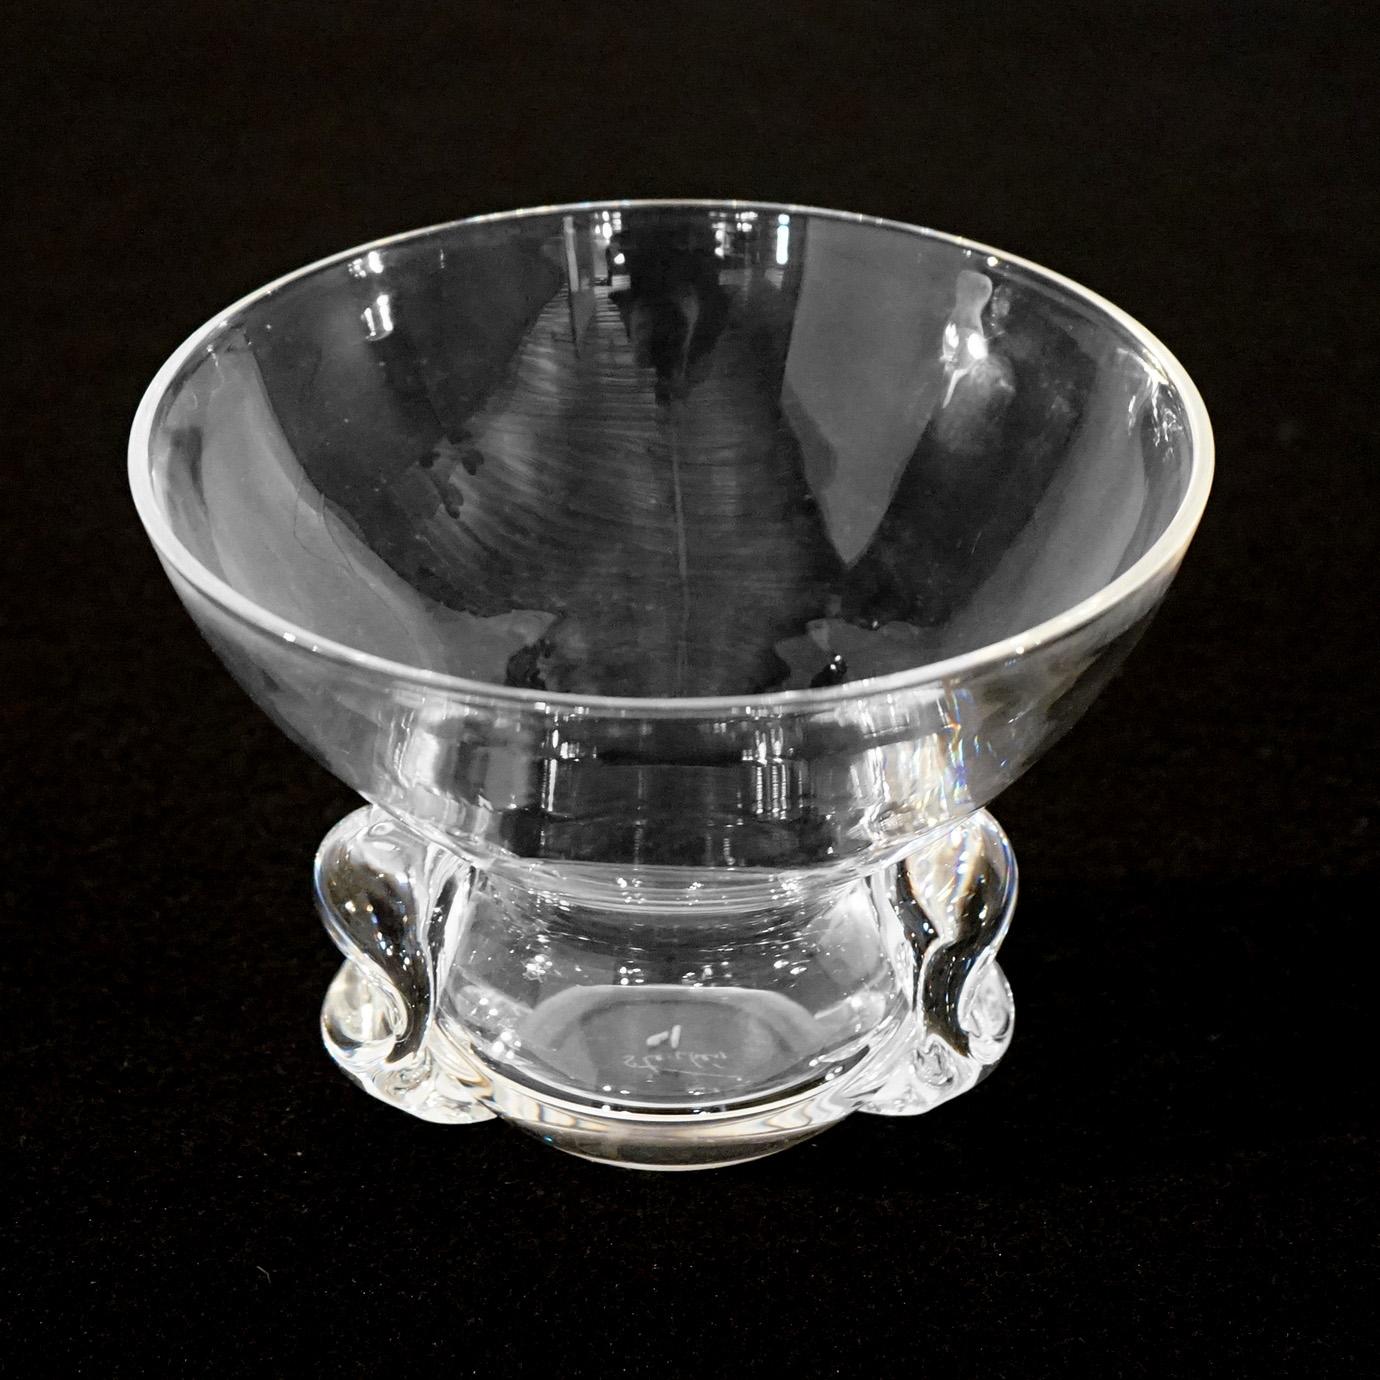 Mid Century Modern Steuben Art Glass Crystal Bowl mit Pinched Base, signiert, 20thC

Maße - 5 